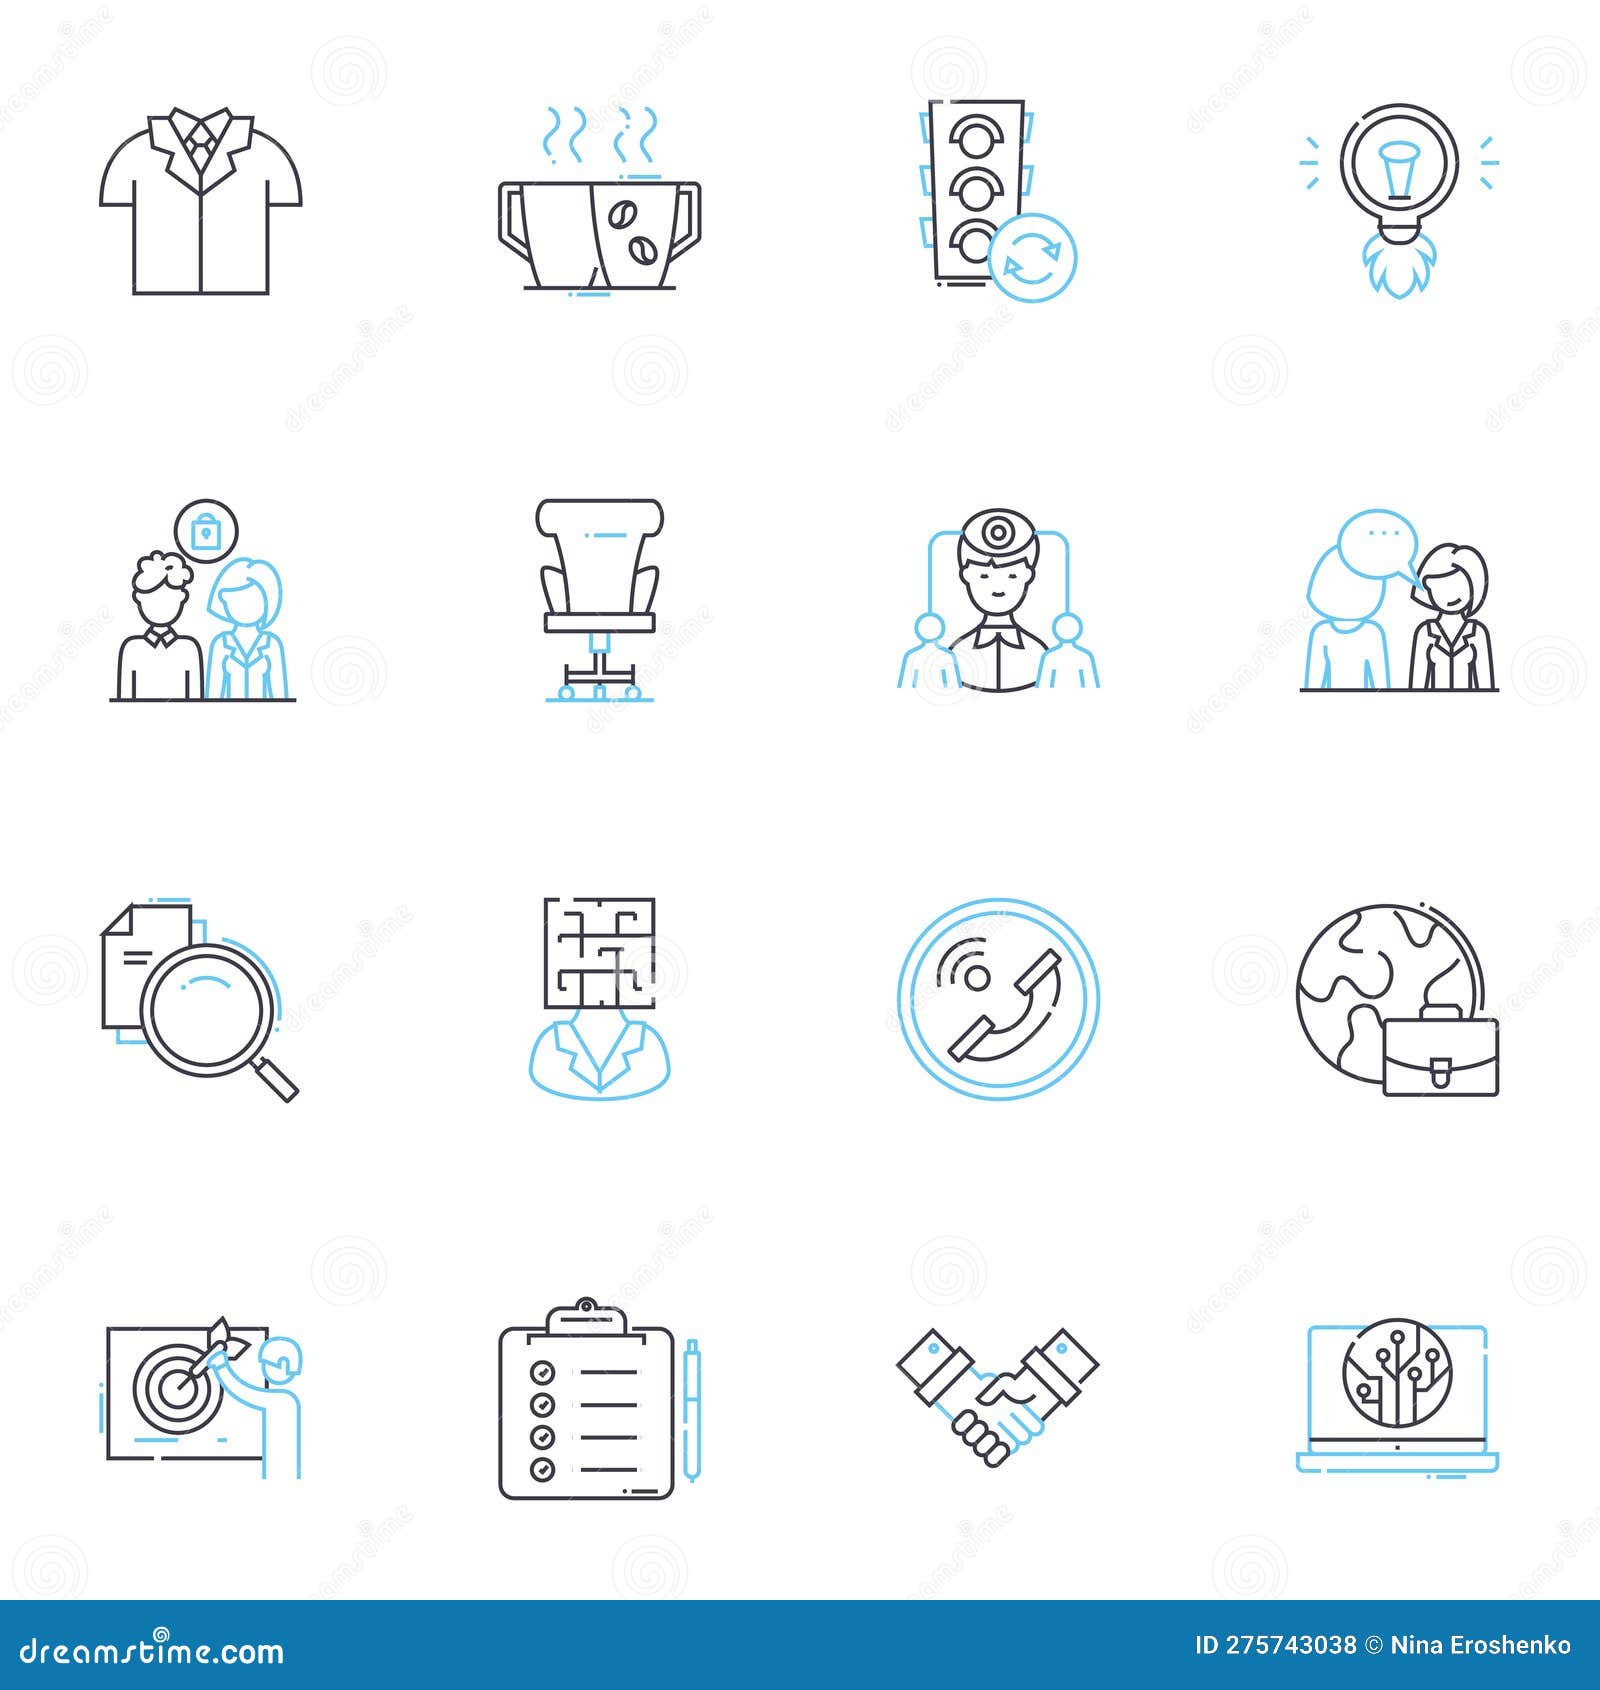 business model linear icons set. innovation, strategy, sustainability, profitability, scalability, customer-centric